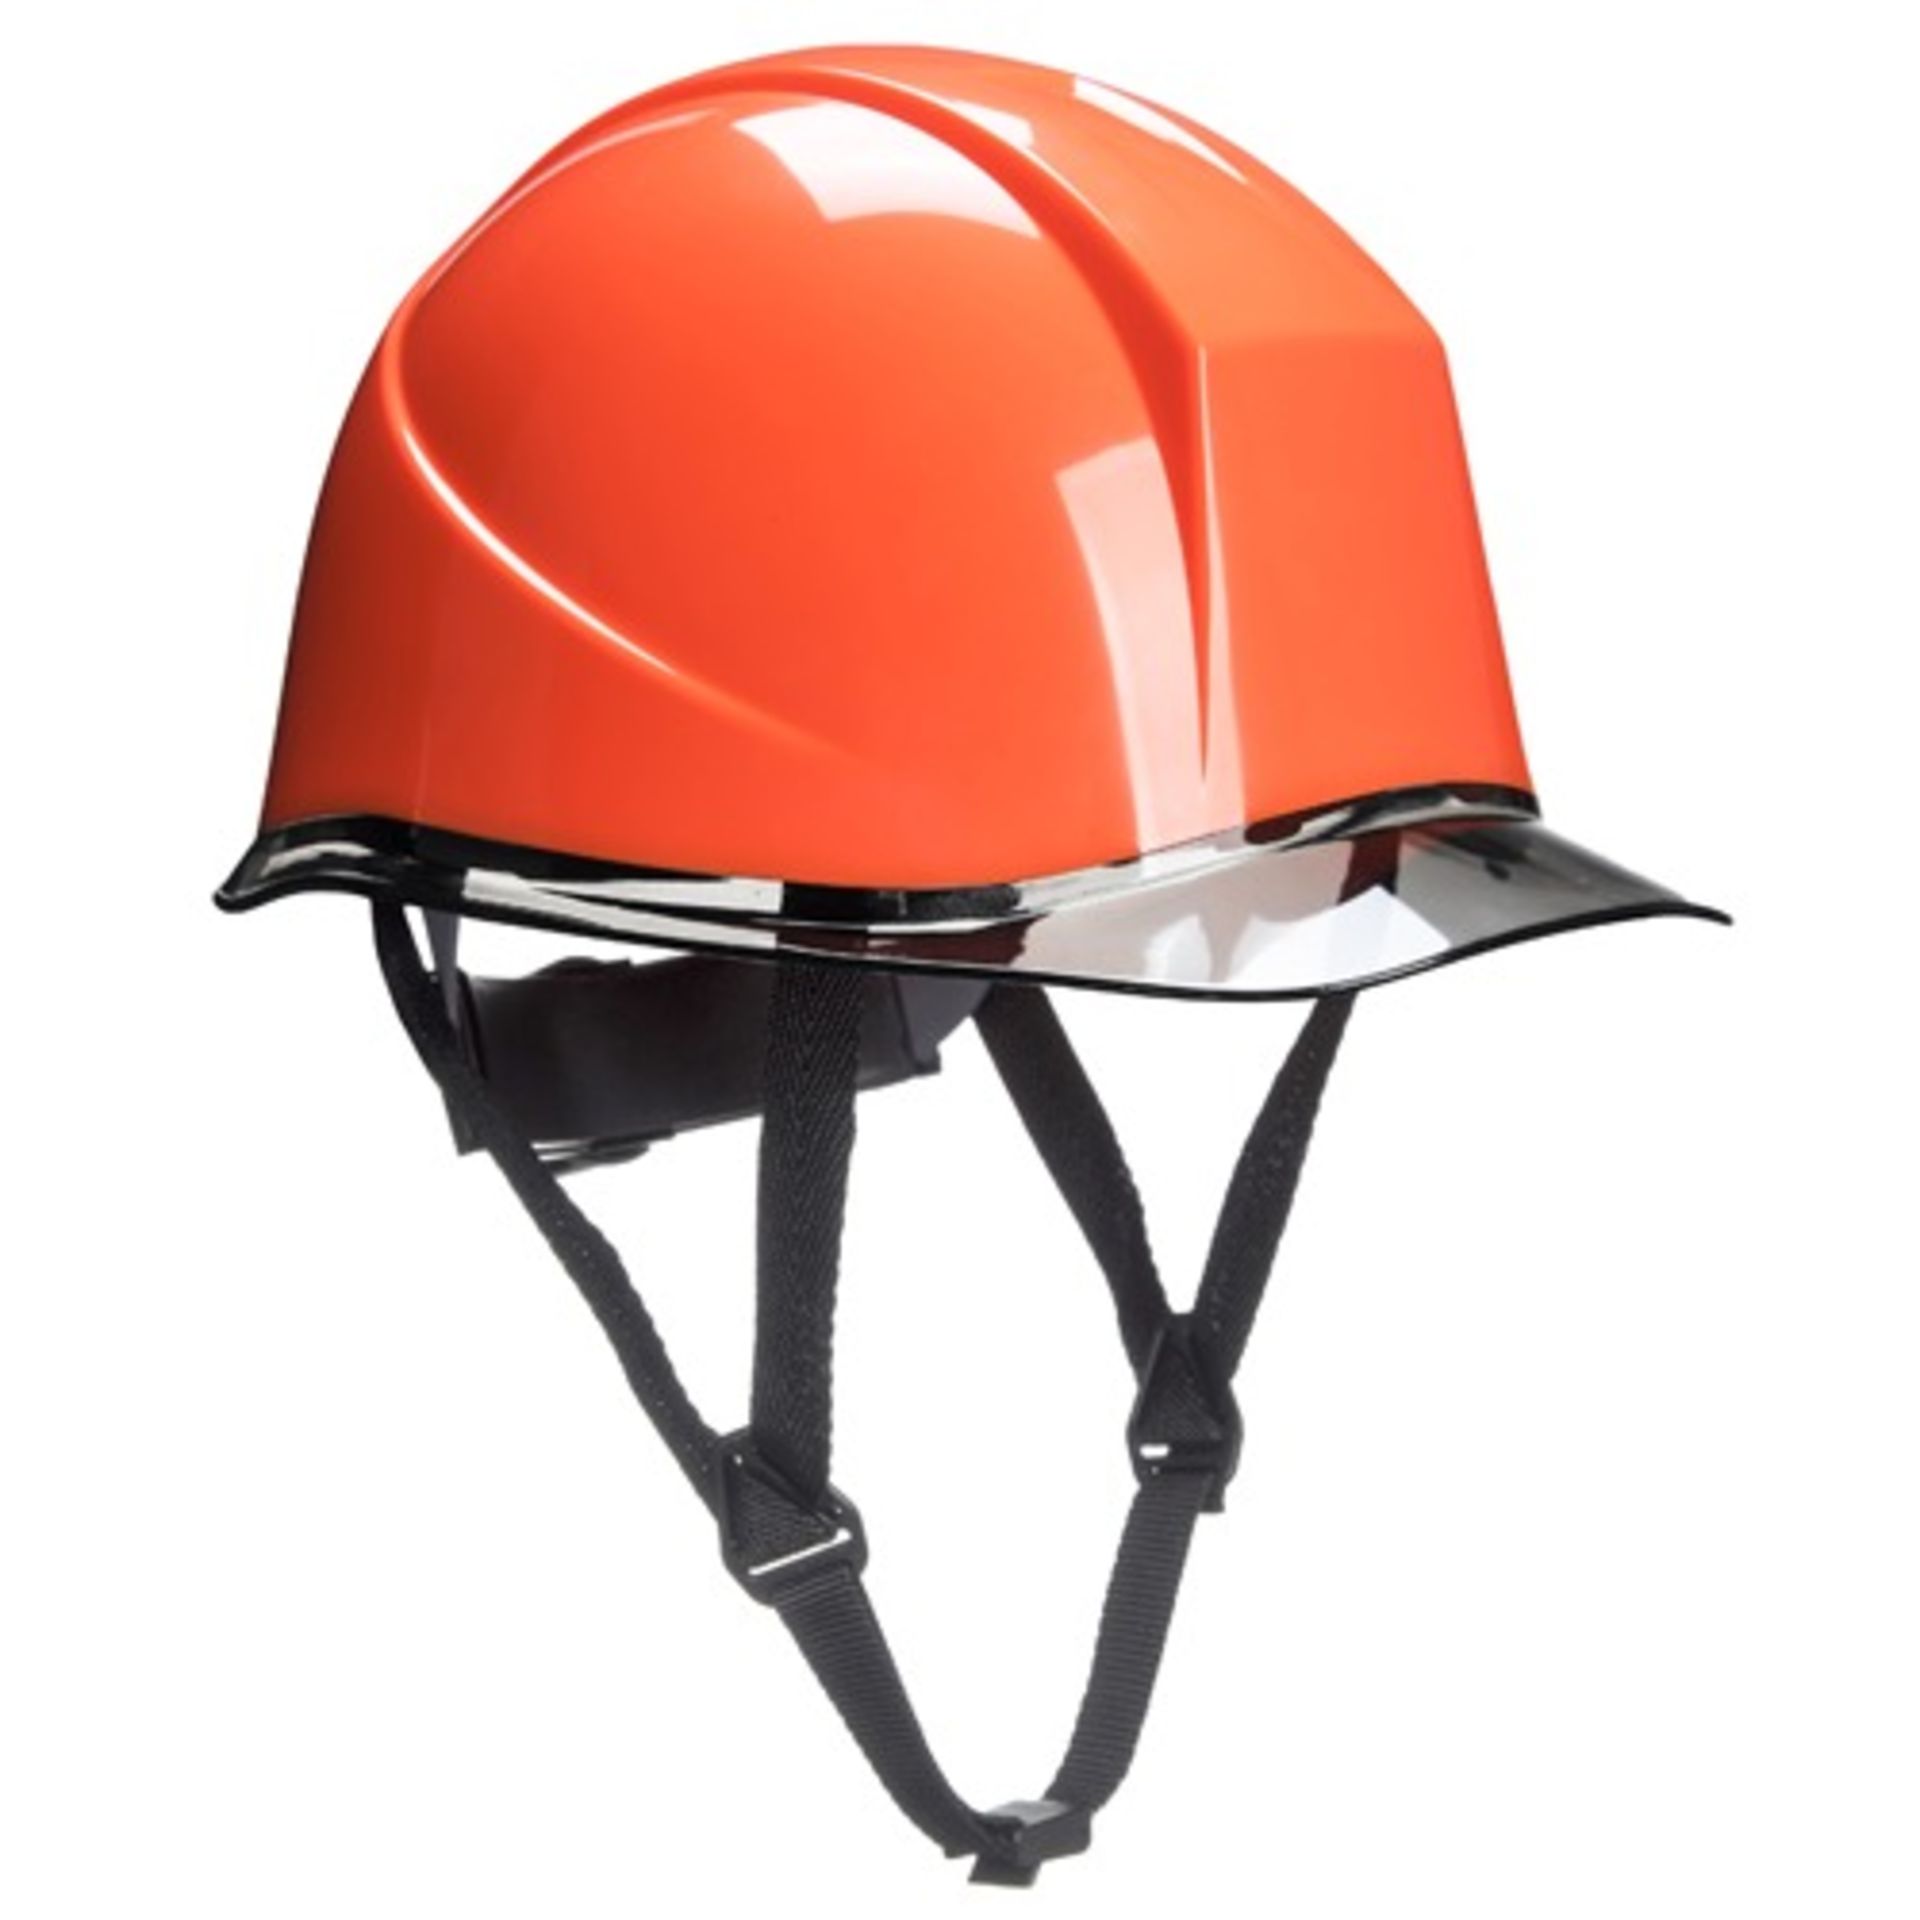 20x Brand New Portwest PV74 Orange Skyview Safety Helmet - RRP £13.99 Each (R40)